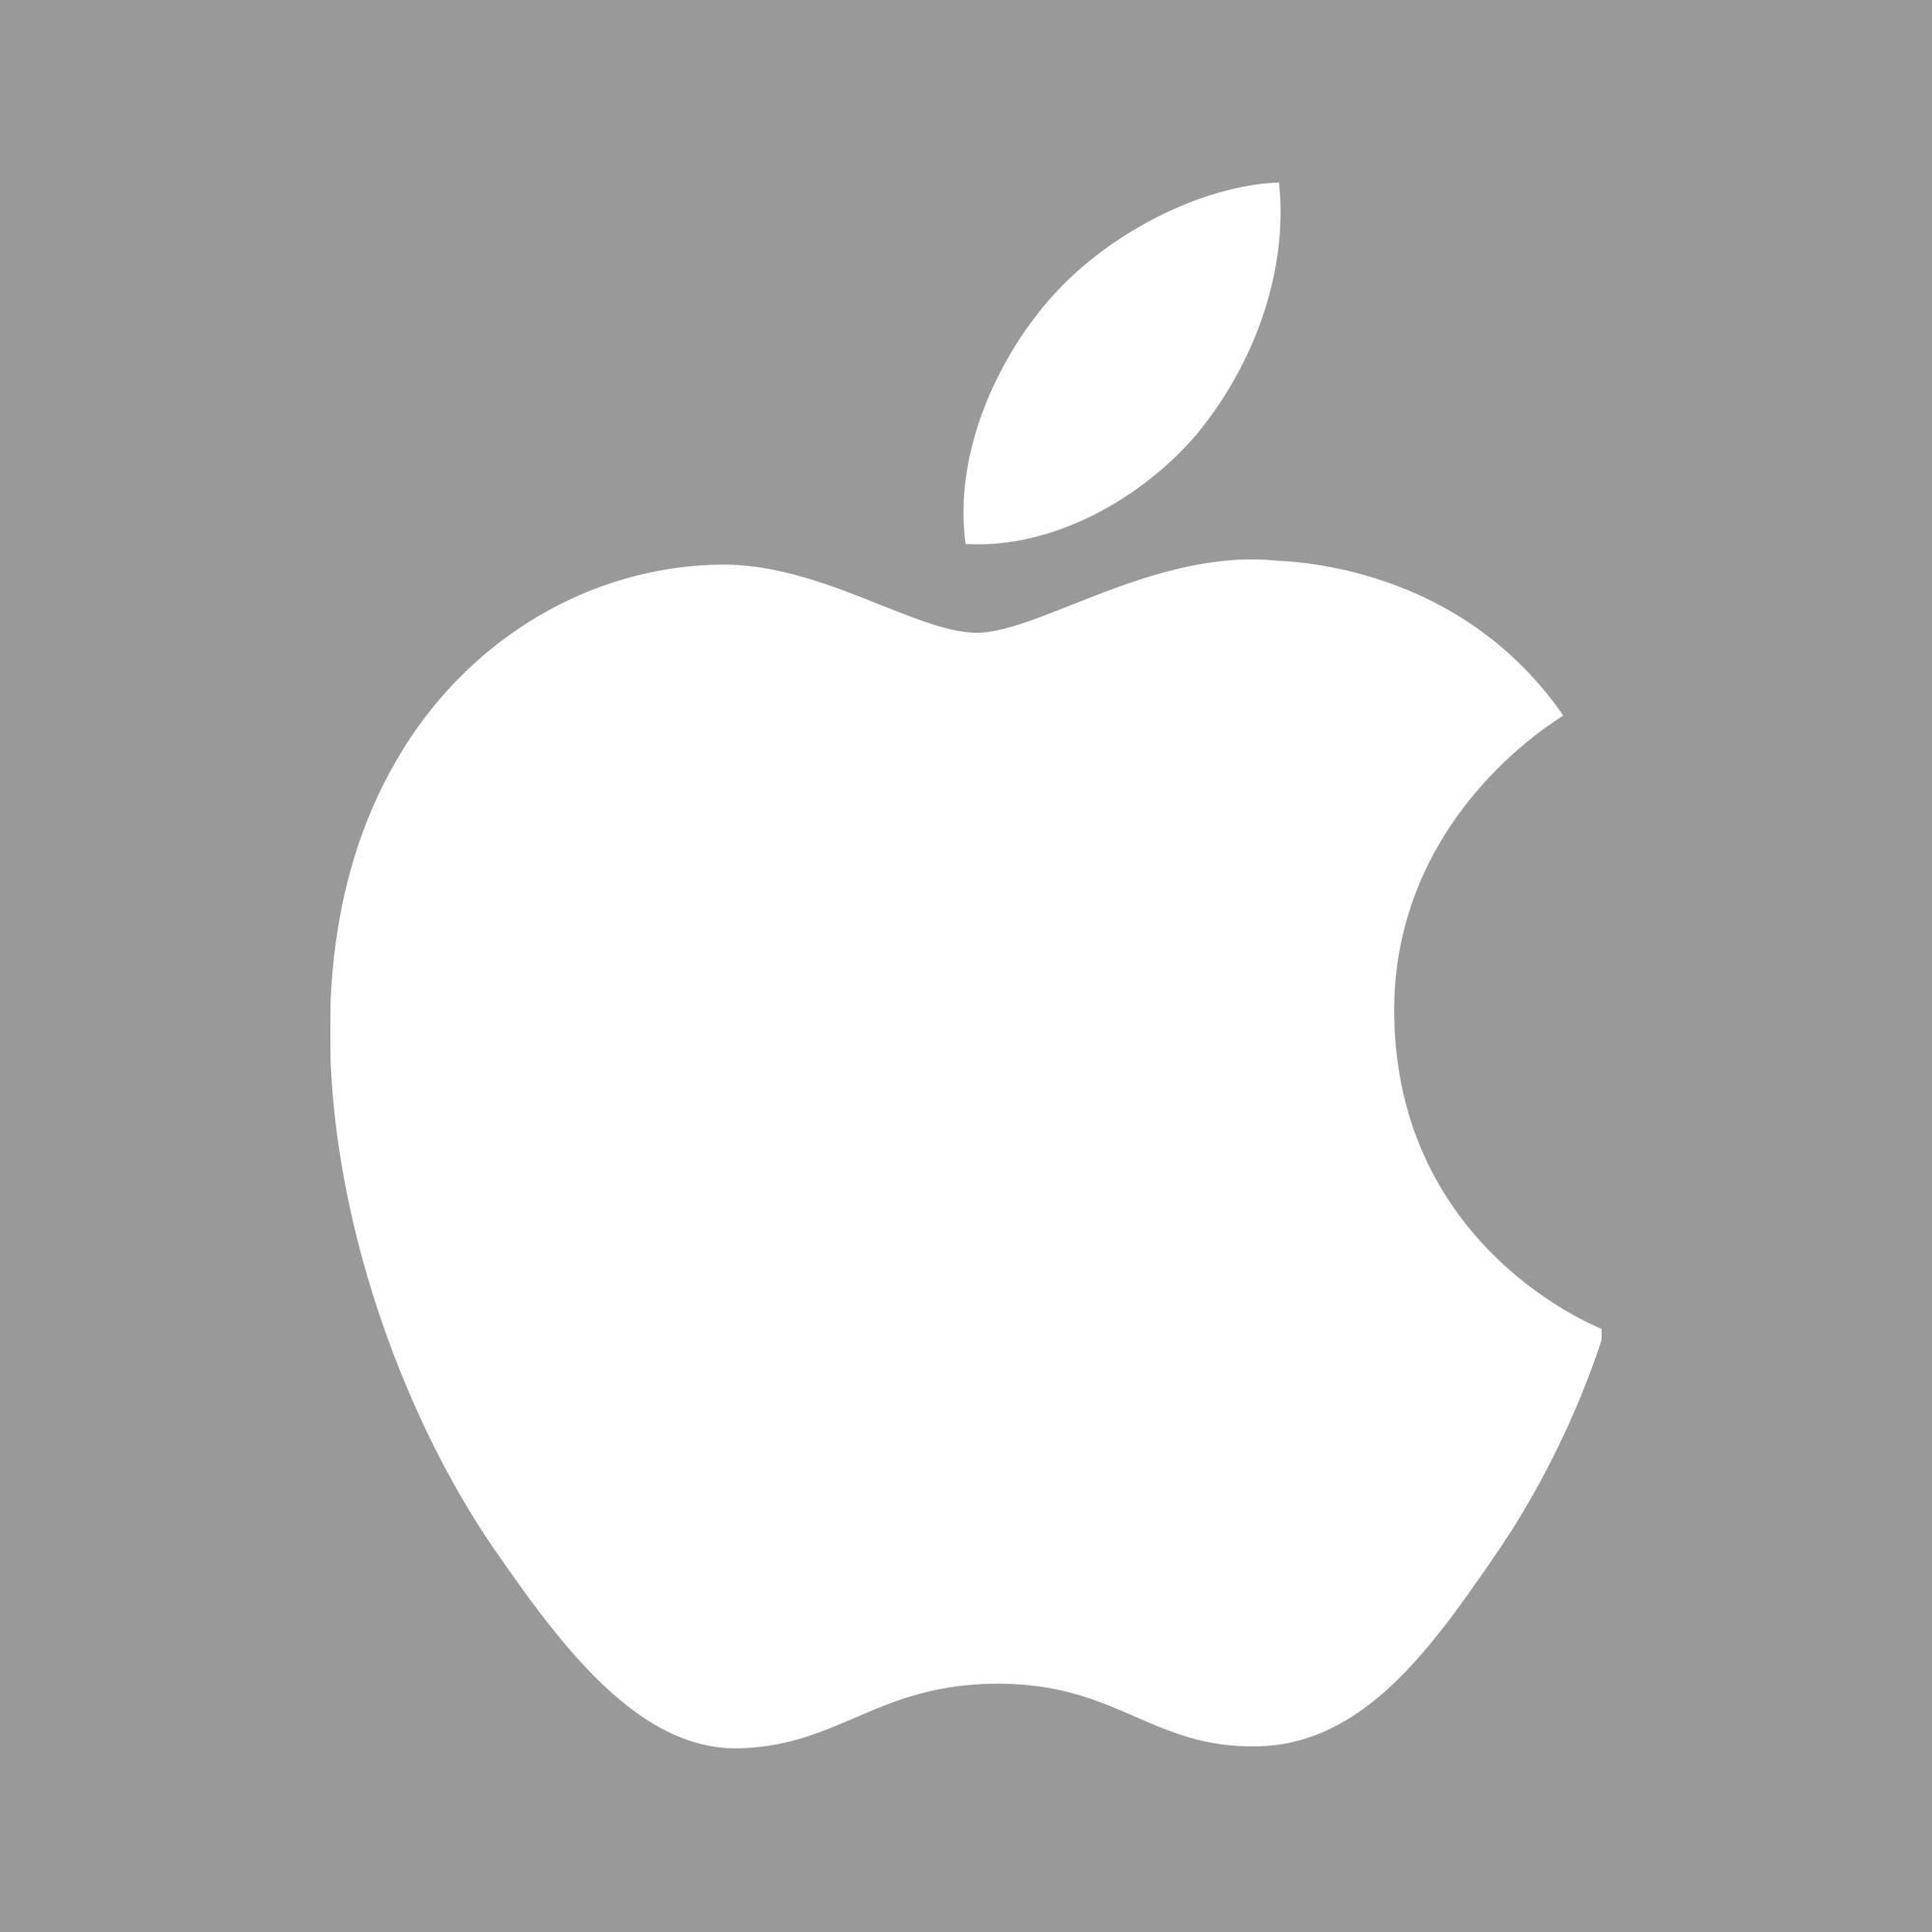 Apply Logo - File:Apple gray logo.png - Wikimedia Commons